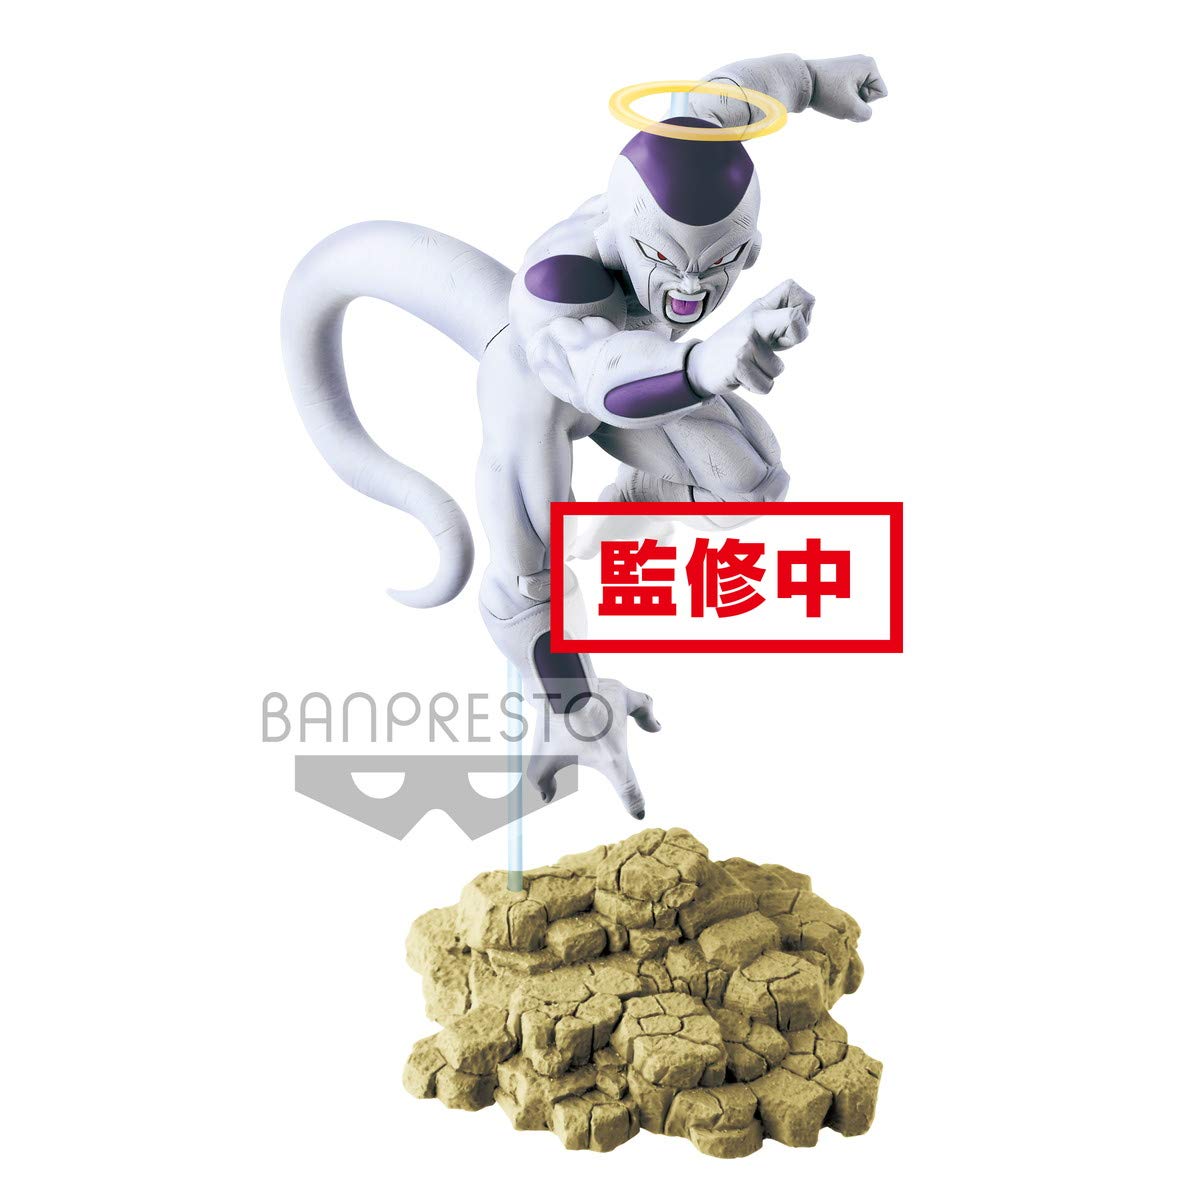 Banpresto Dragon ball Super Tag Fighters Freeza Figure - Super Anime Store FREE SHIPPING FAST SHIPPING USA